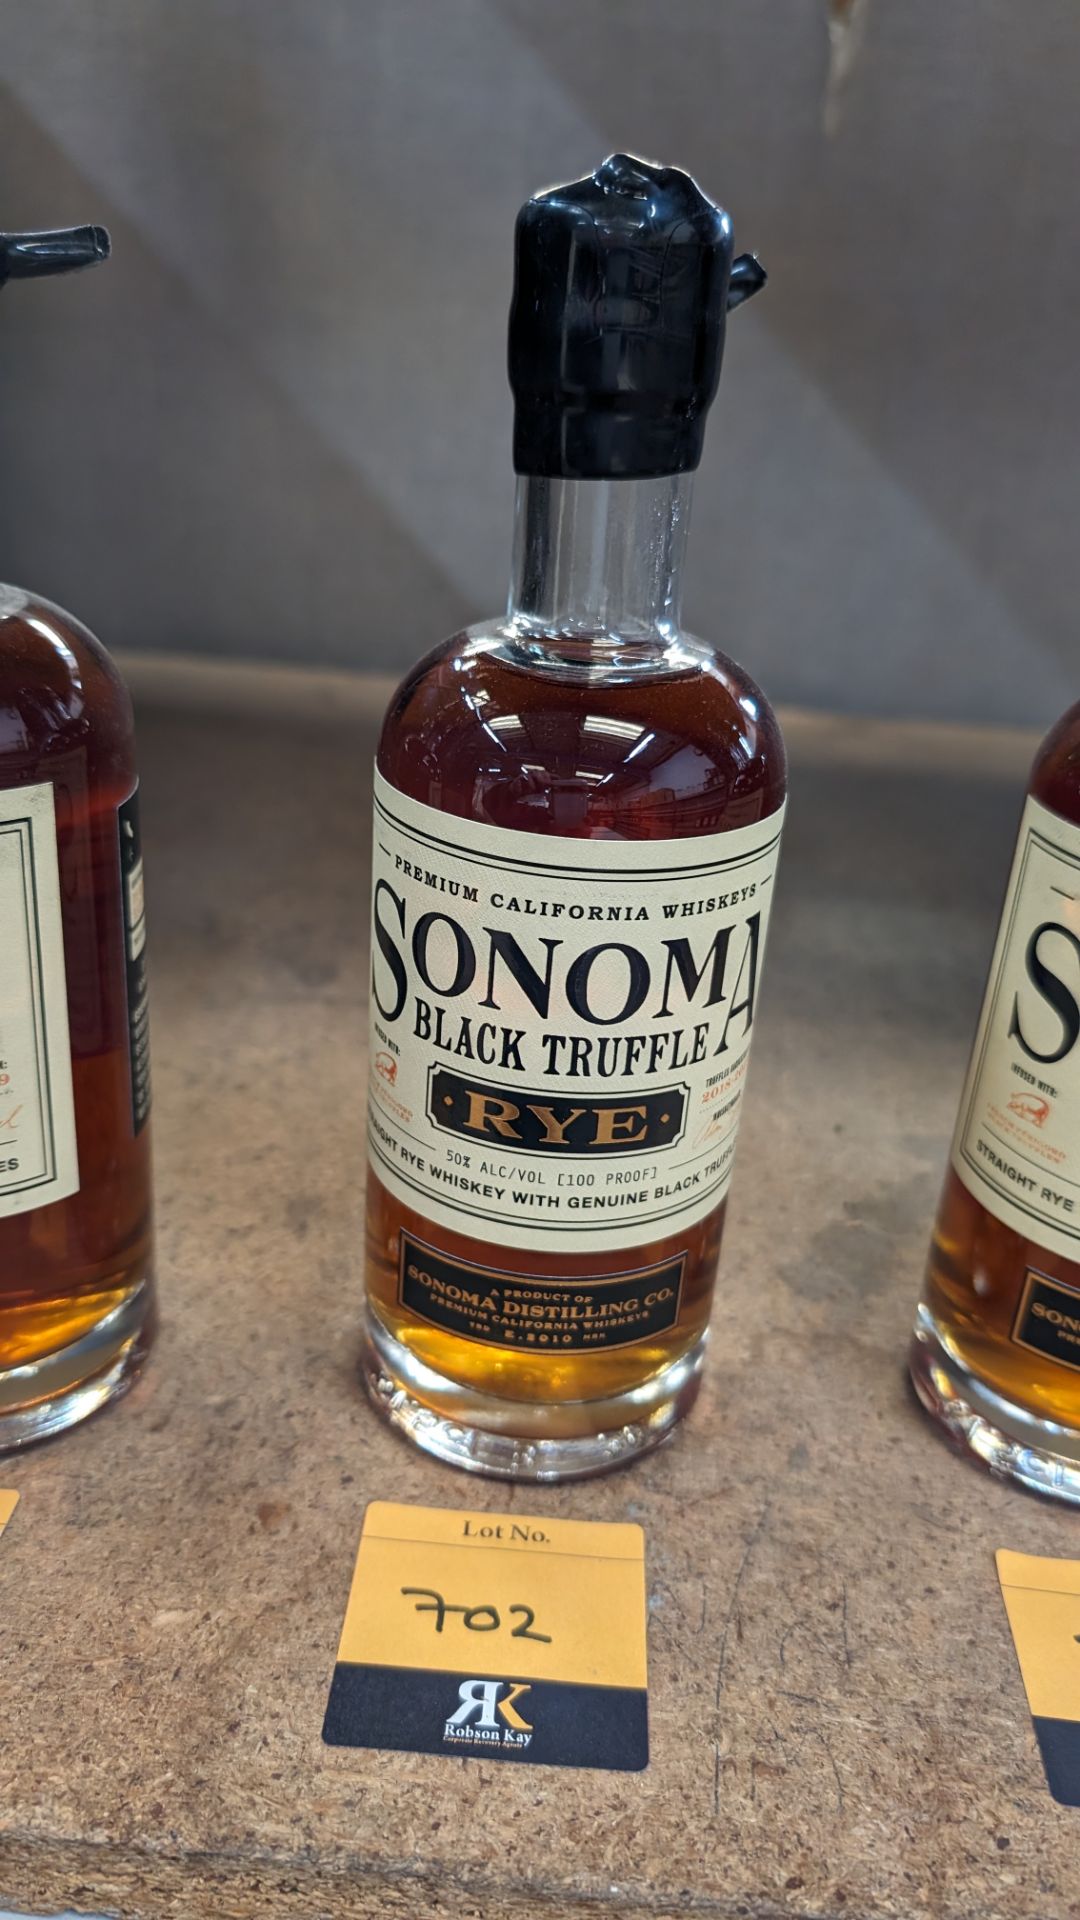 1 off 375ml bottle of Sonoma Black Truffle Rye Whiskey. 50% alc/vol (100 proof). Straight rye whis